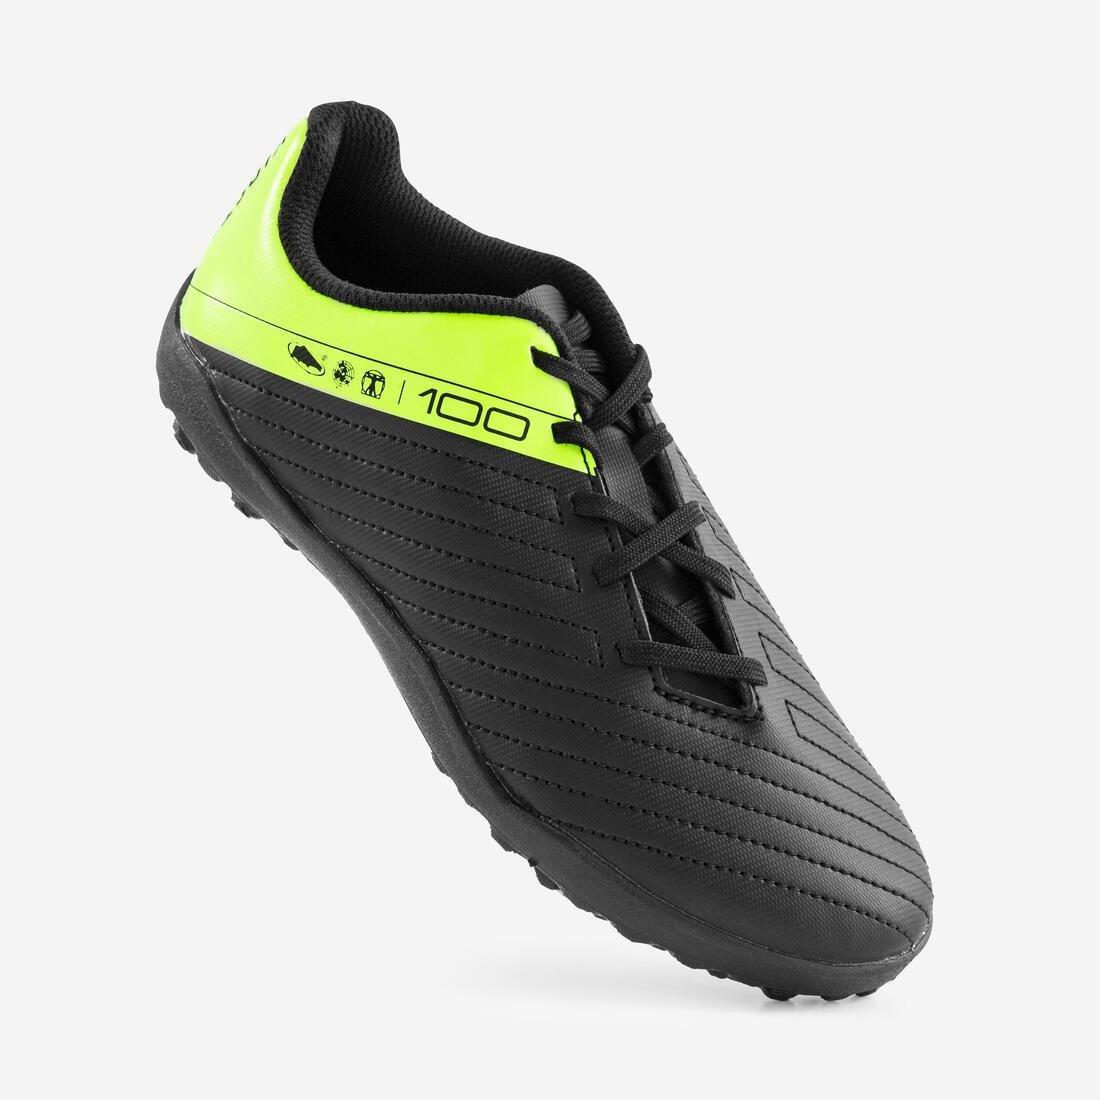 KIPSTA - Hard Ground Football Boots - Agility 100 Hg, Yellow